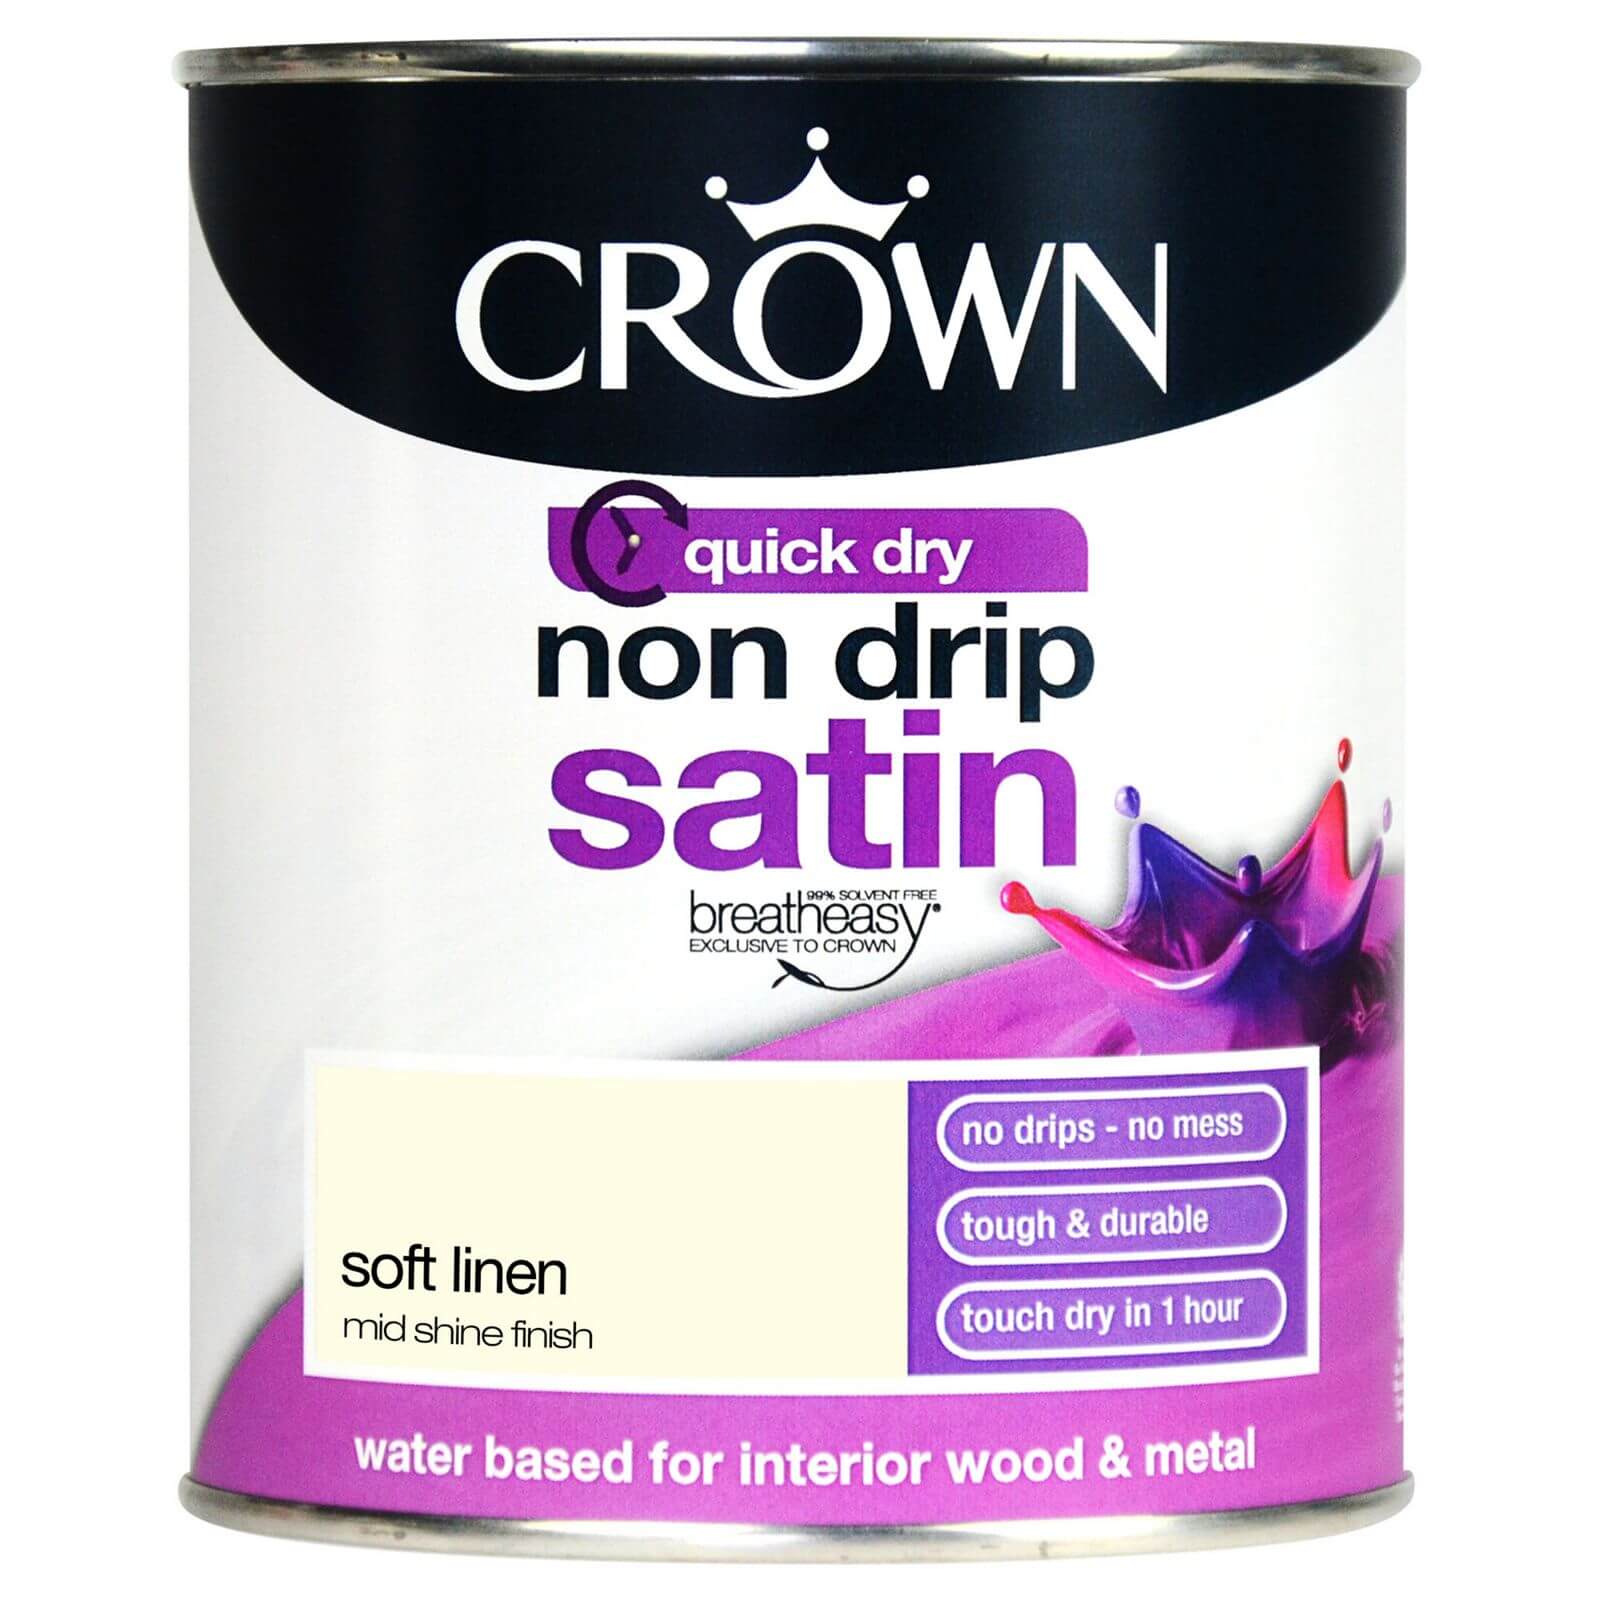 Crown Standard Breatheasy Non Drip Satin Paint Soft Linen - 750ml